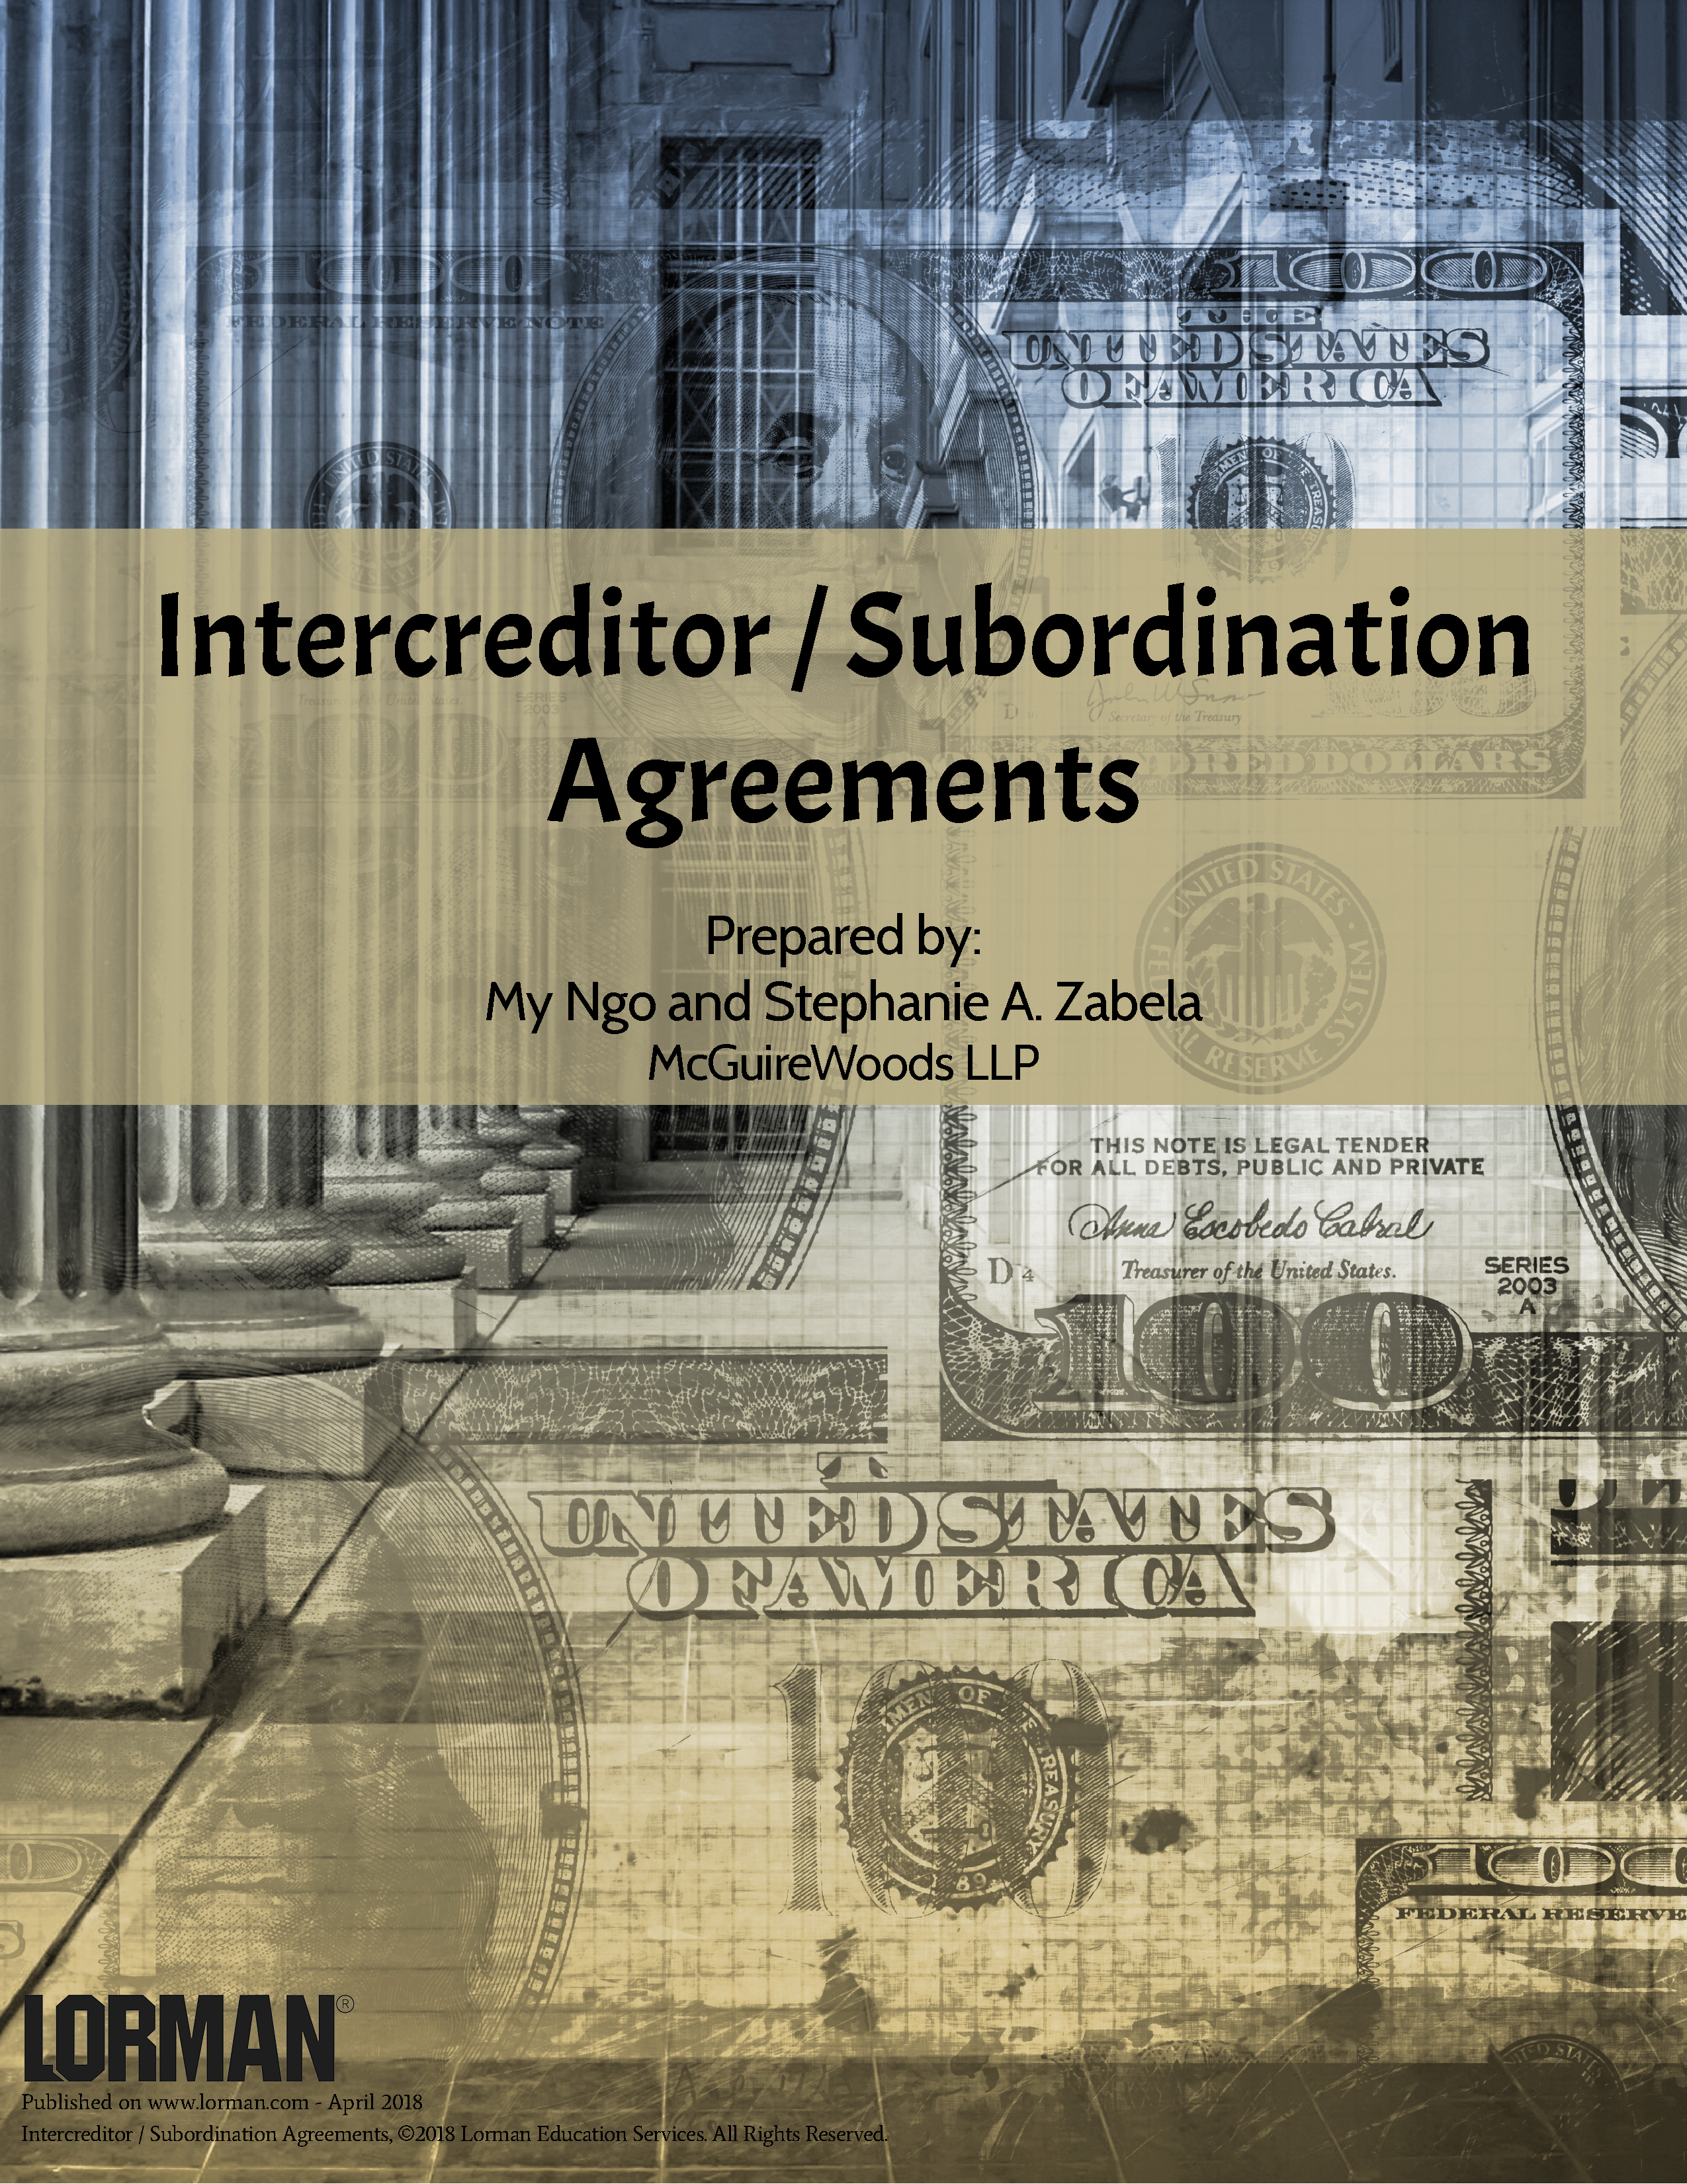 Intercreditor/Subordination Agreements